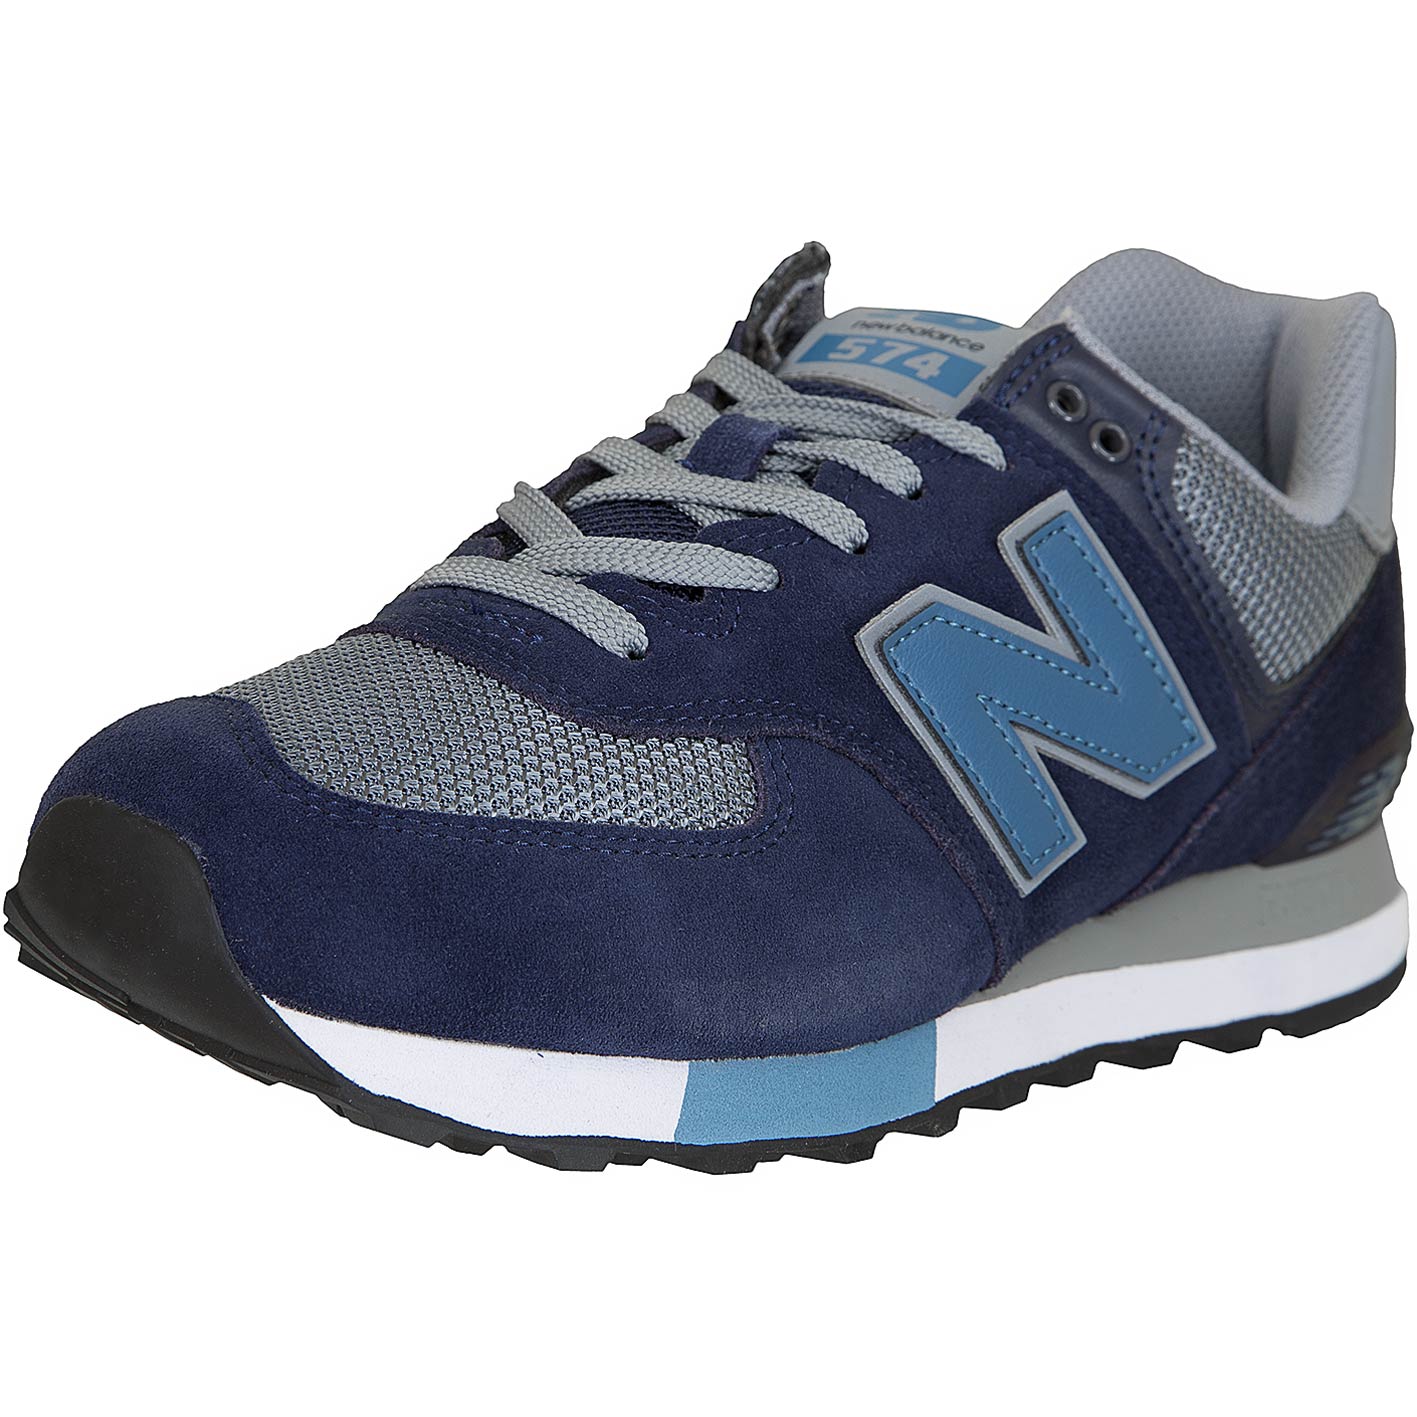 ☆ New Balance Sneaker 574 PU Wildleder/Textil blau/grau - hier bestellen!